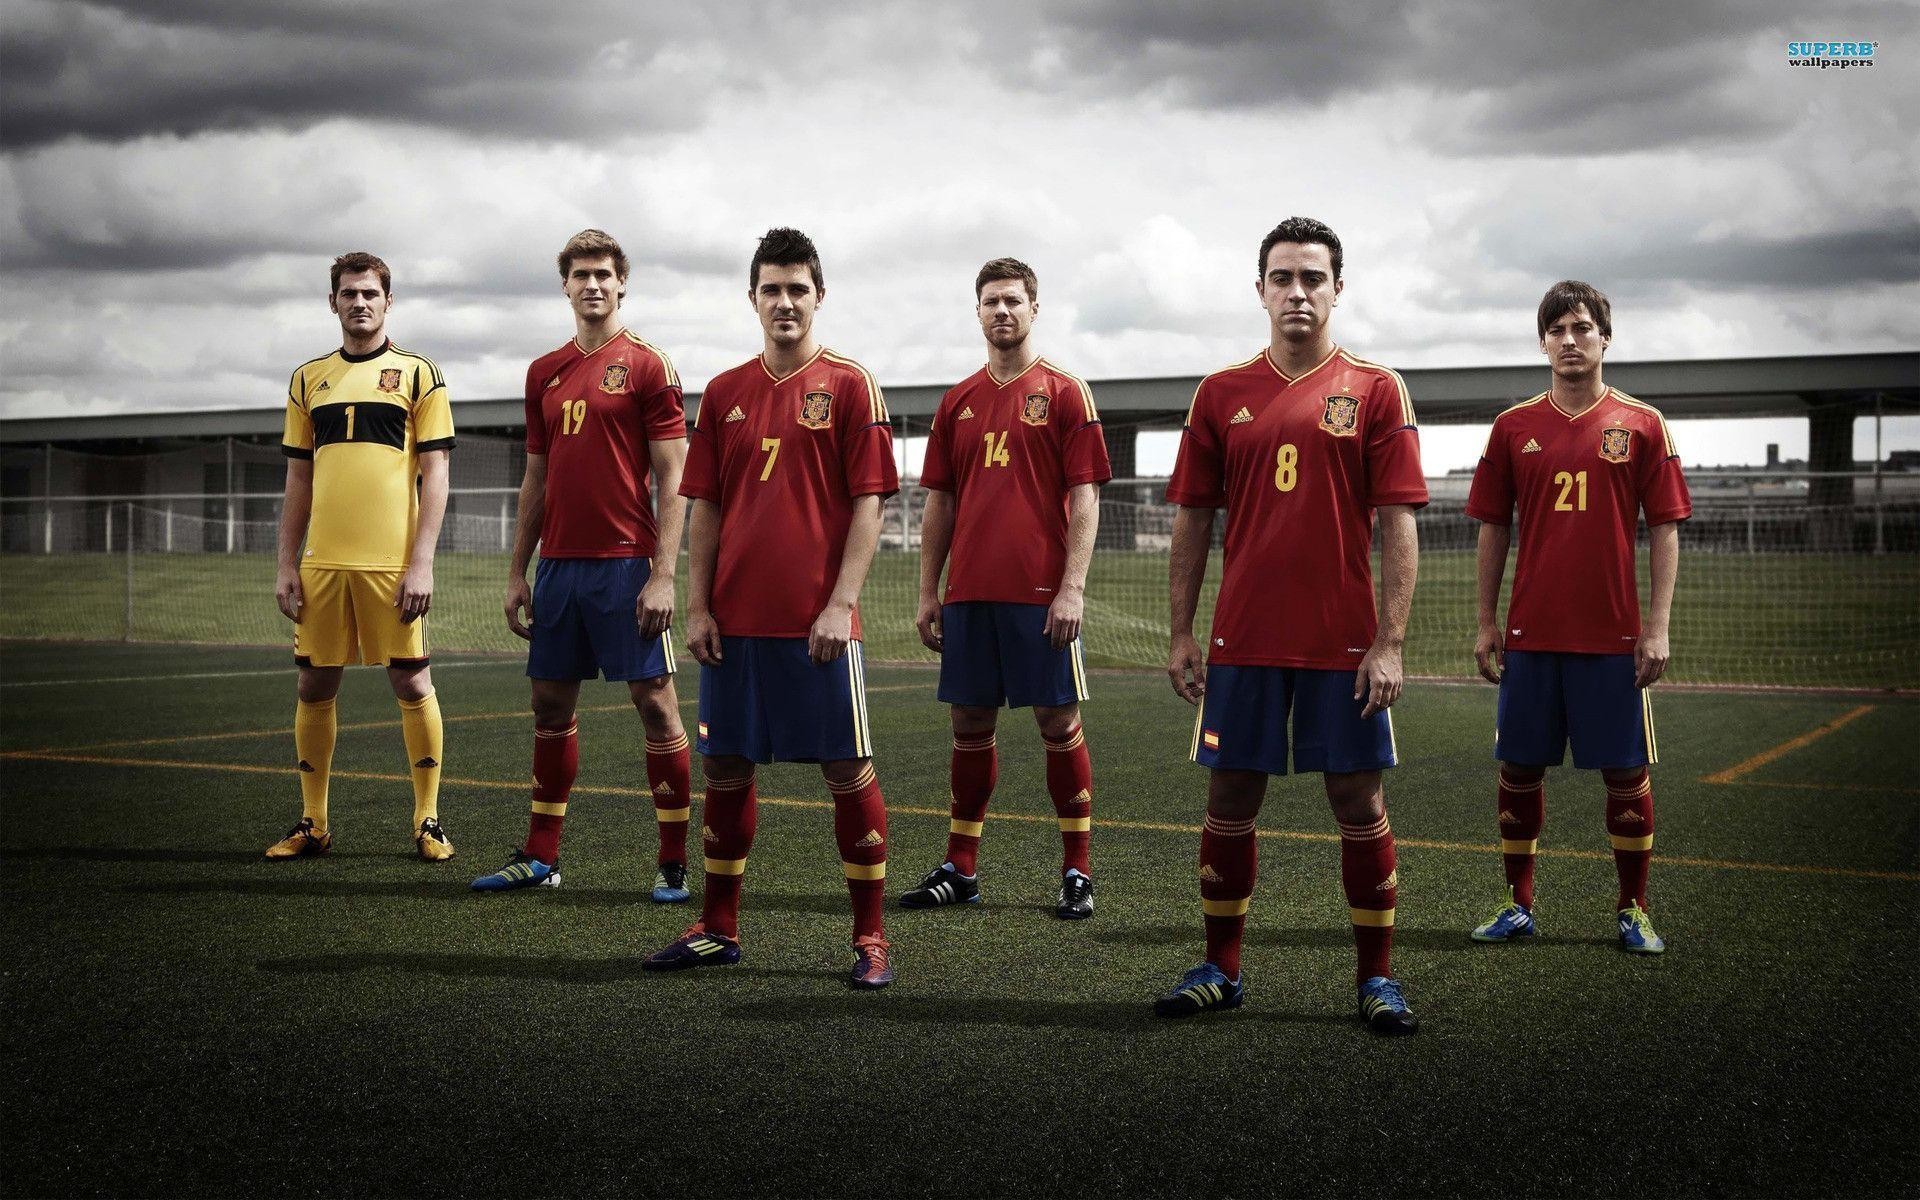 1920x1200 Spain national football team 2012 wallpaper - Sport wallpapers - #